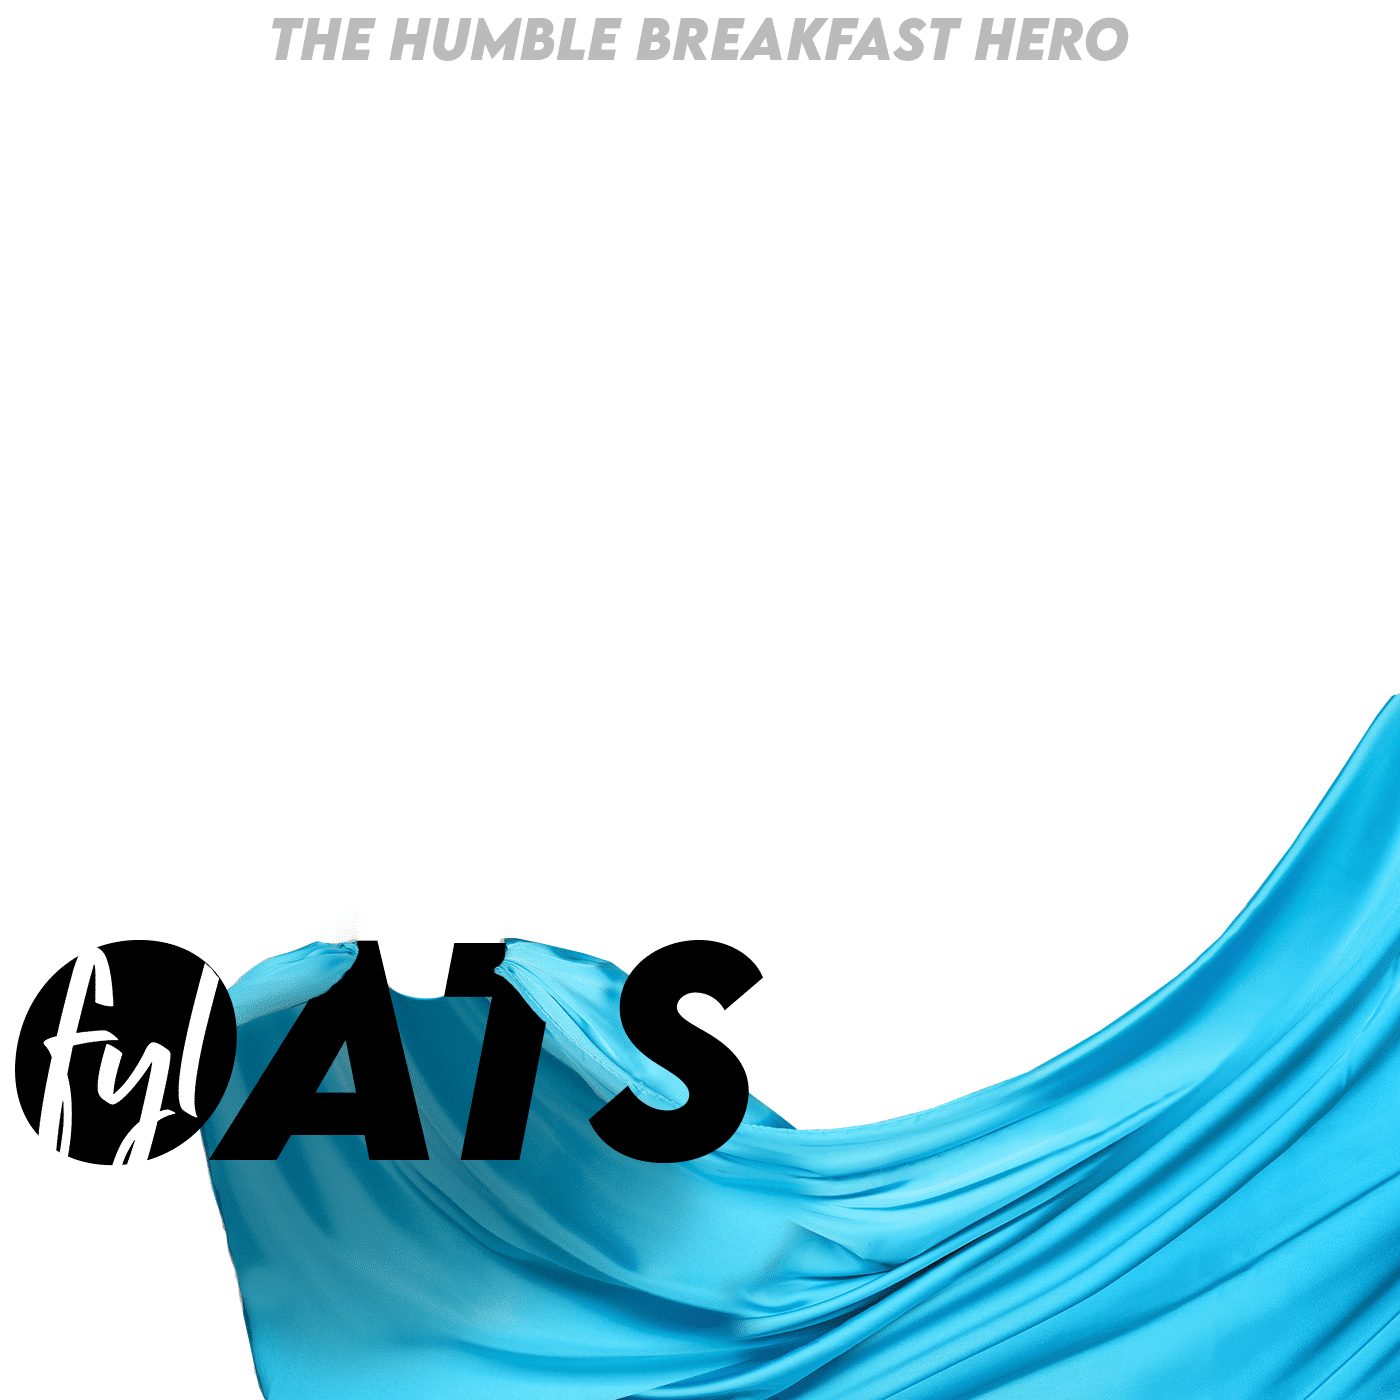 Oats – The Humble Breakfast Hero